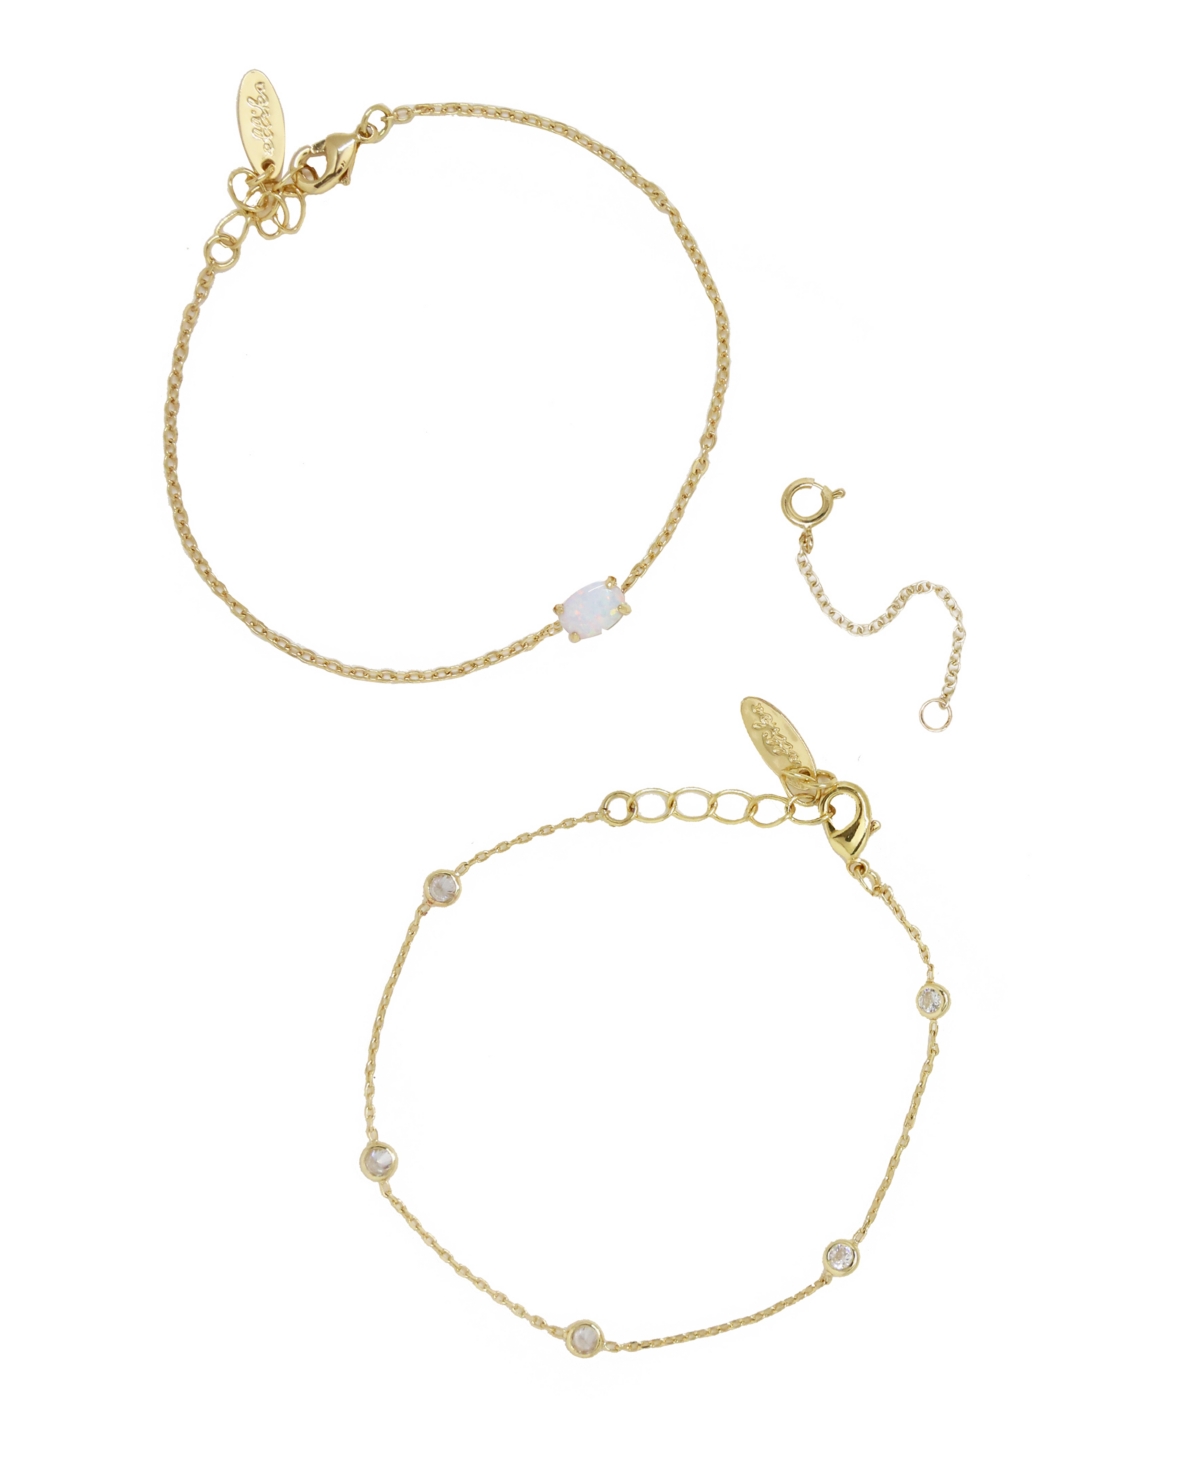 Opal Crystal Dainty Women's Bracelet Set with Extender Add On - Gold